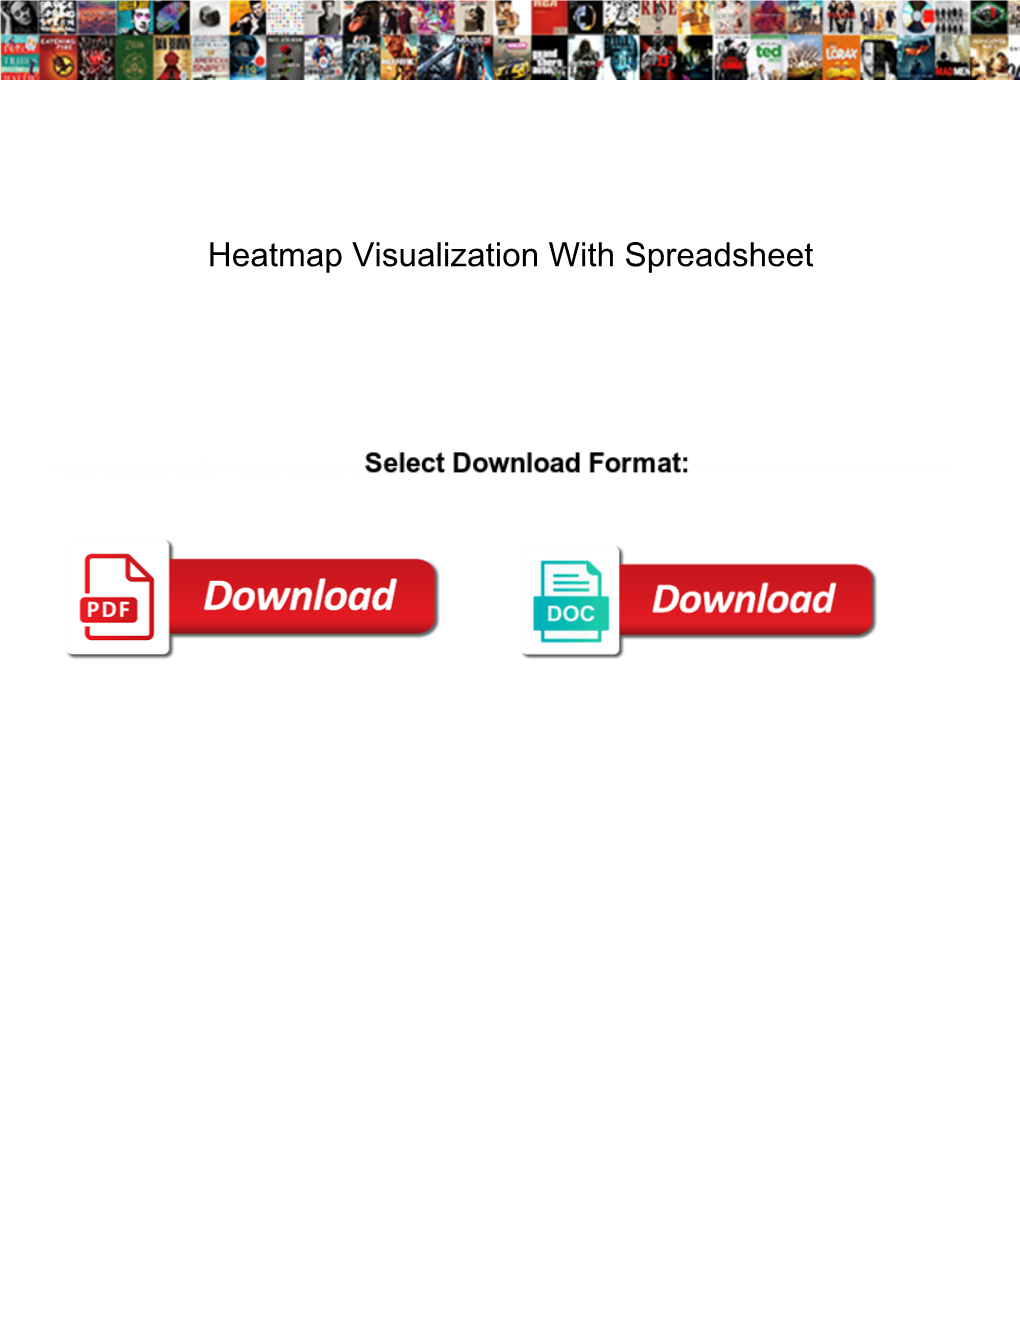 Heatmap Visualization with Spreadsheet